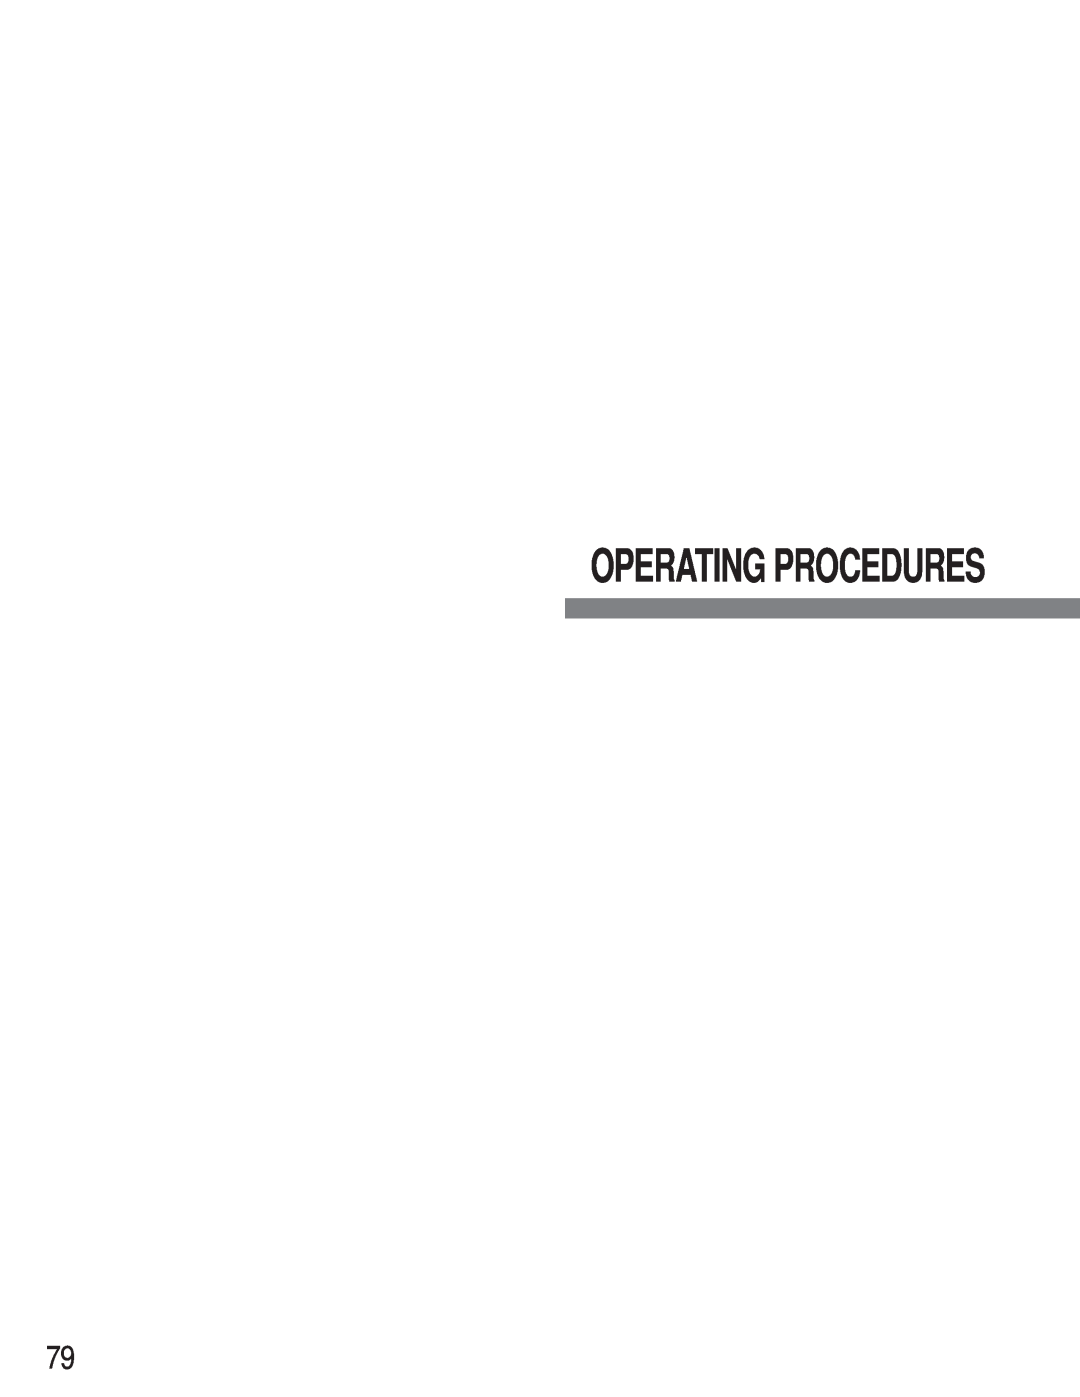 Panasonic WJ-HD500A manual Operating Procedures 